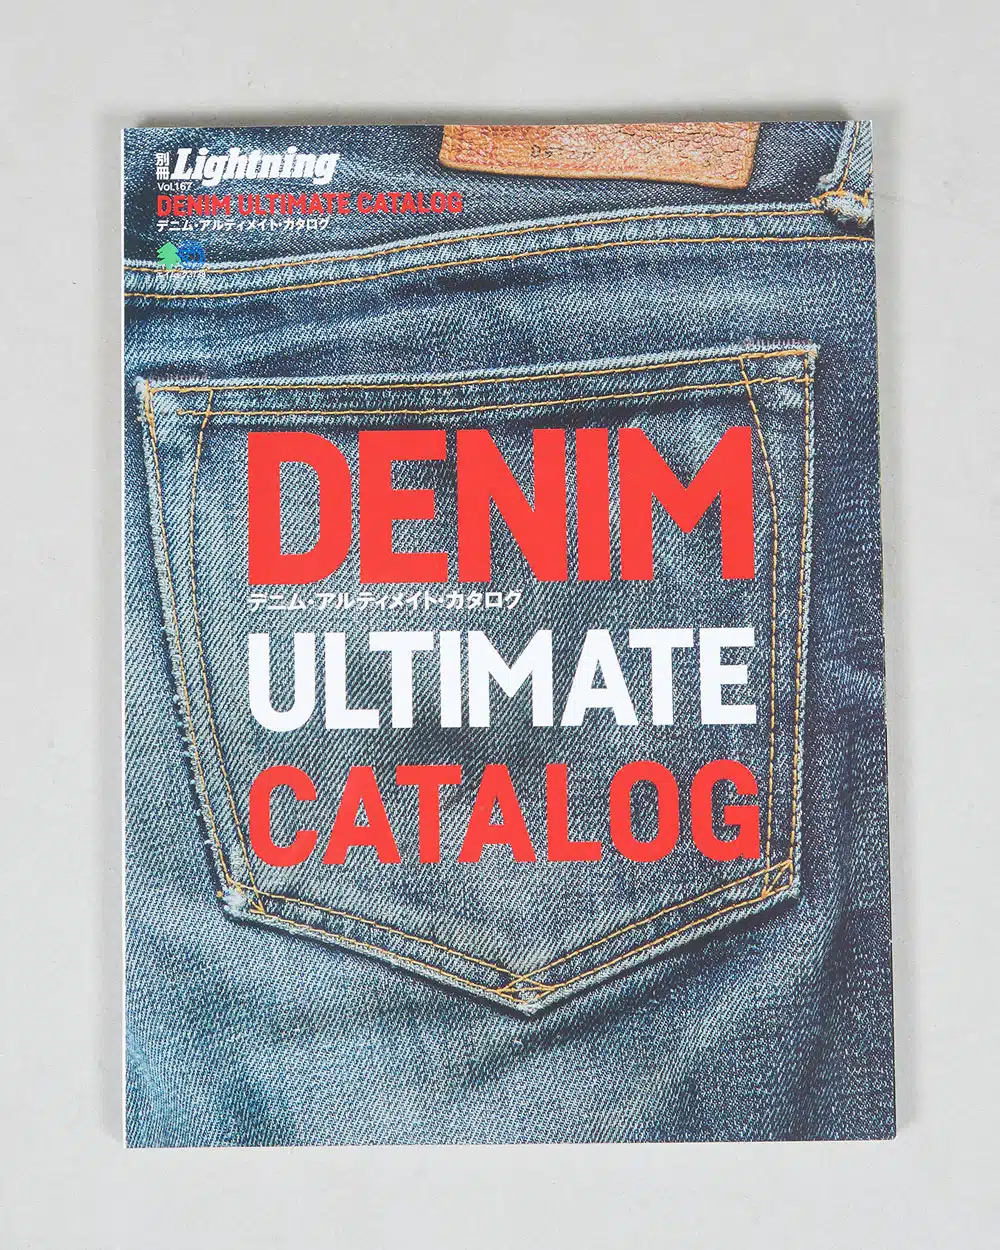 Lightning Archives Vol. 167 "Denim Ultimate Catalog"